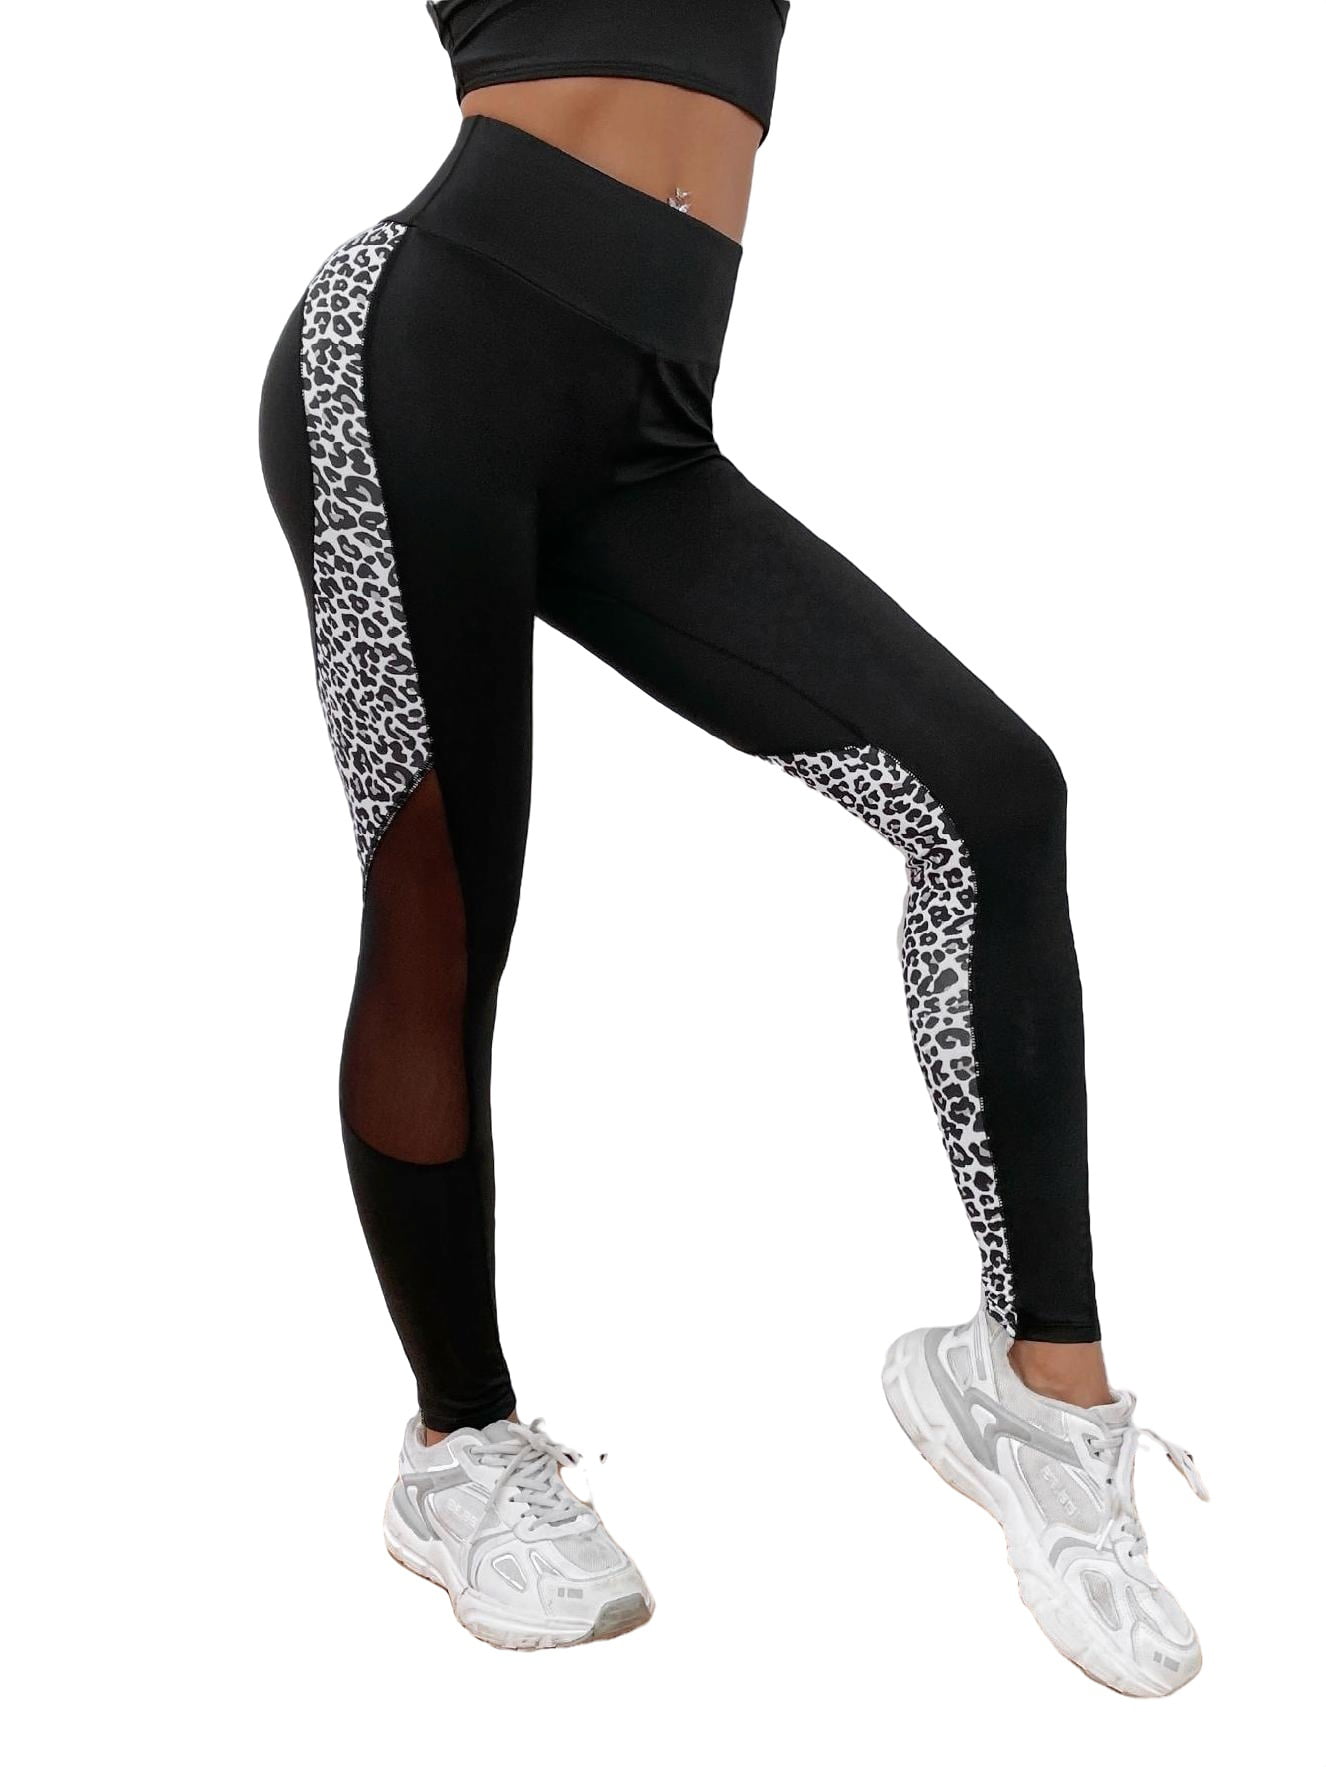 Womens Activewear Sports Leggings Leopard Print Leggings Black and